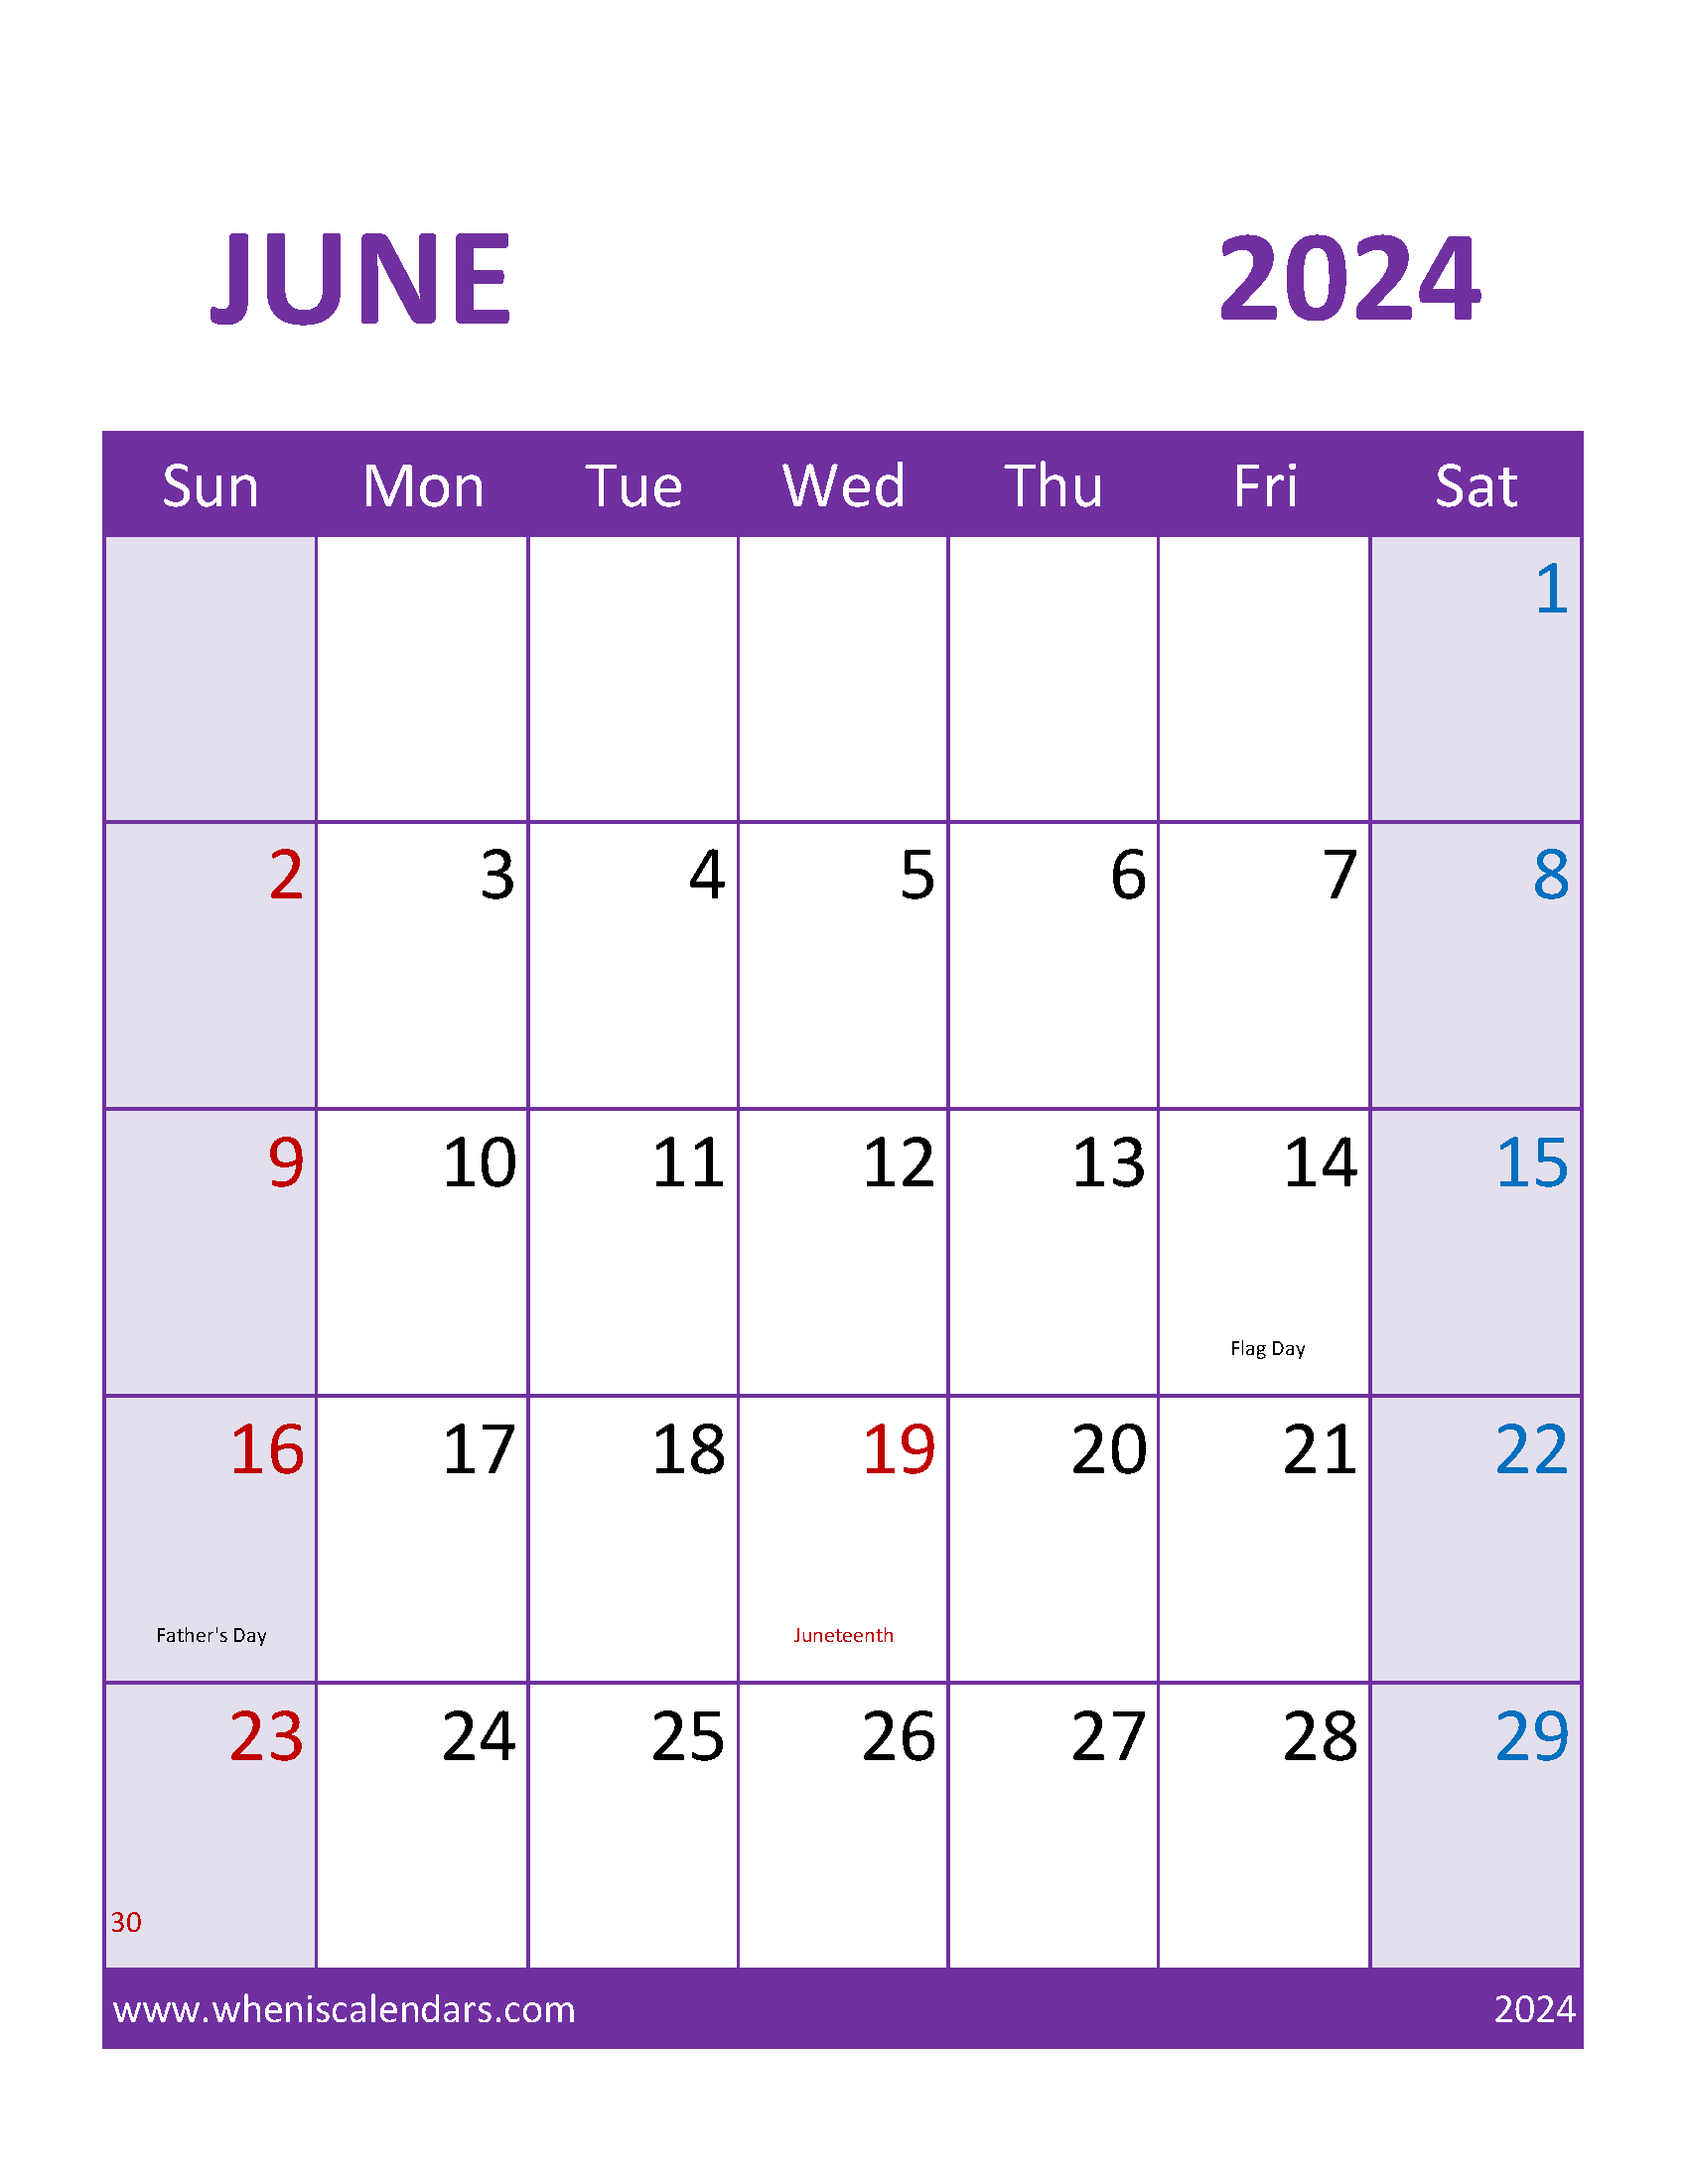 June 2024 Calendar Print out